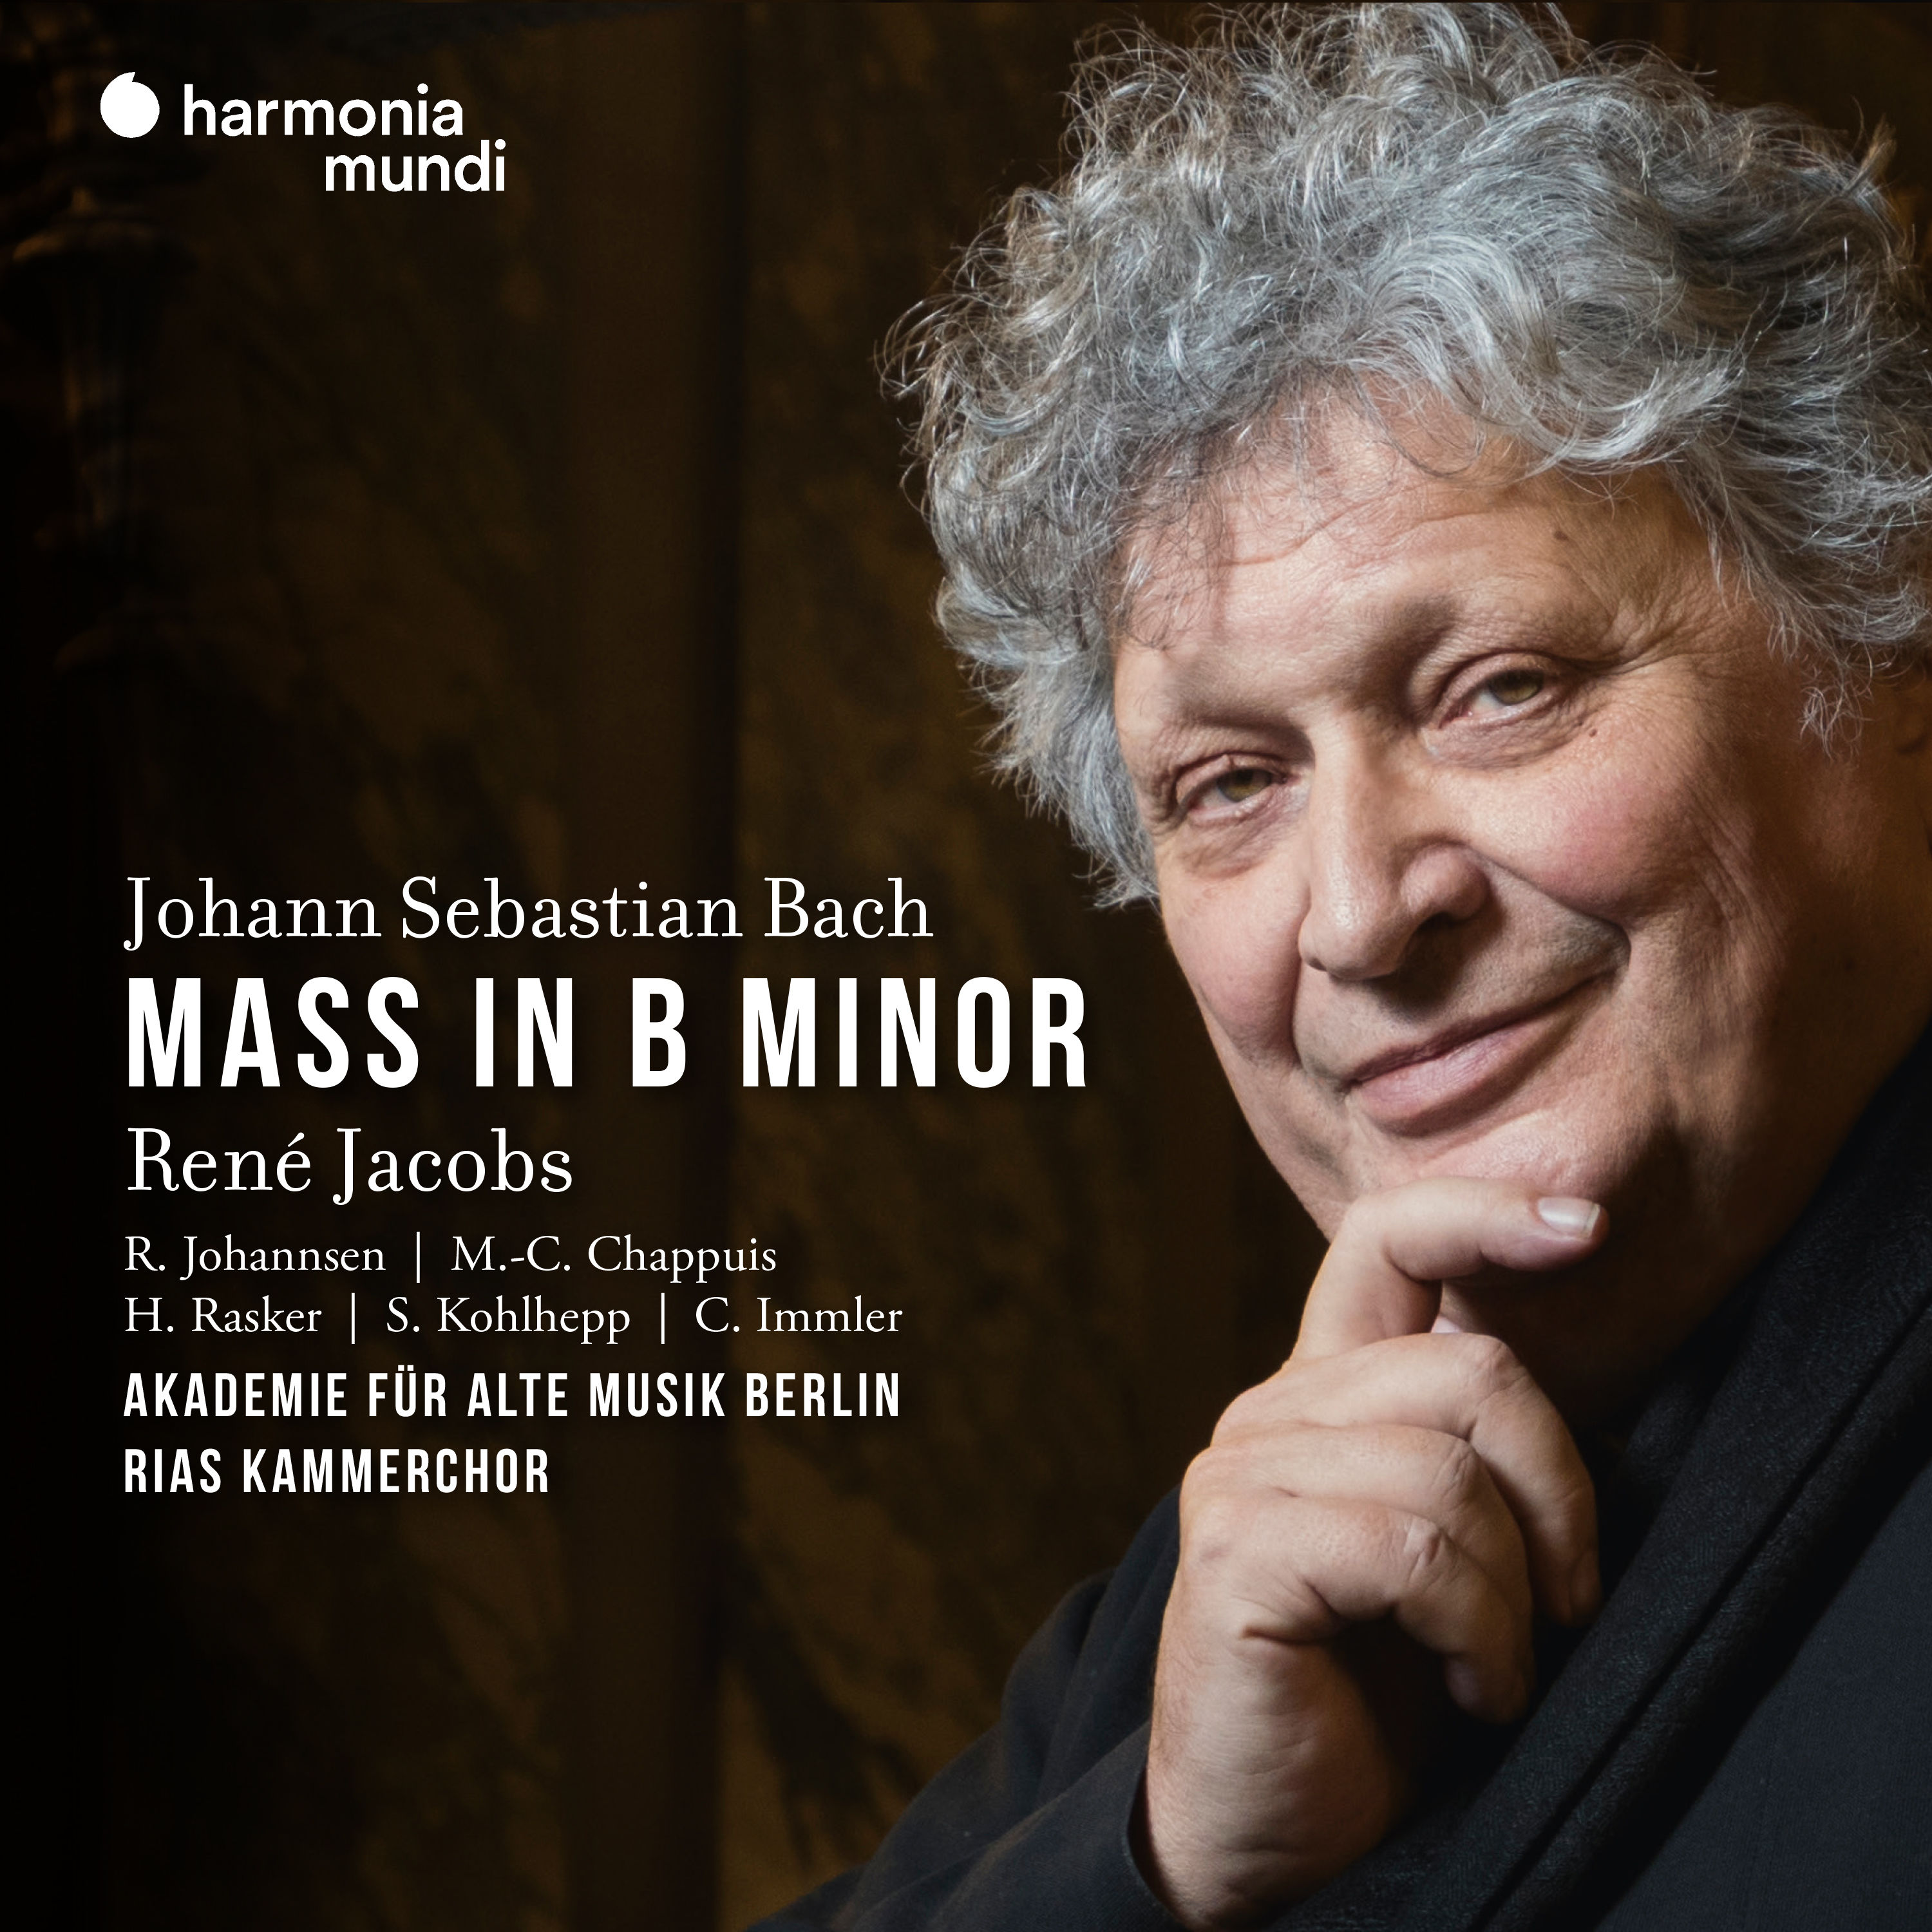 Rene Jacobs - Bach Mass in B Minor BWV 232 cd1 van 2 - 24-96